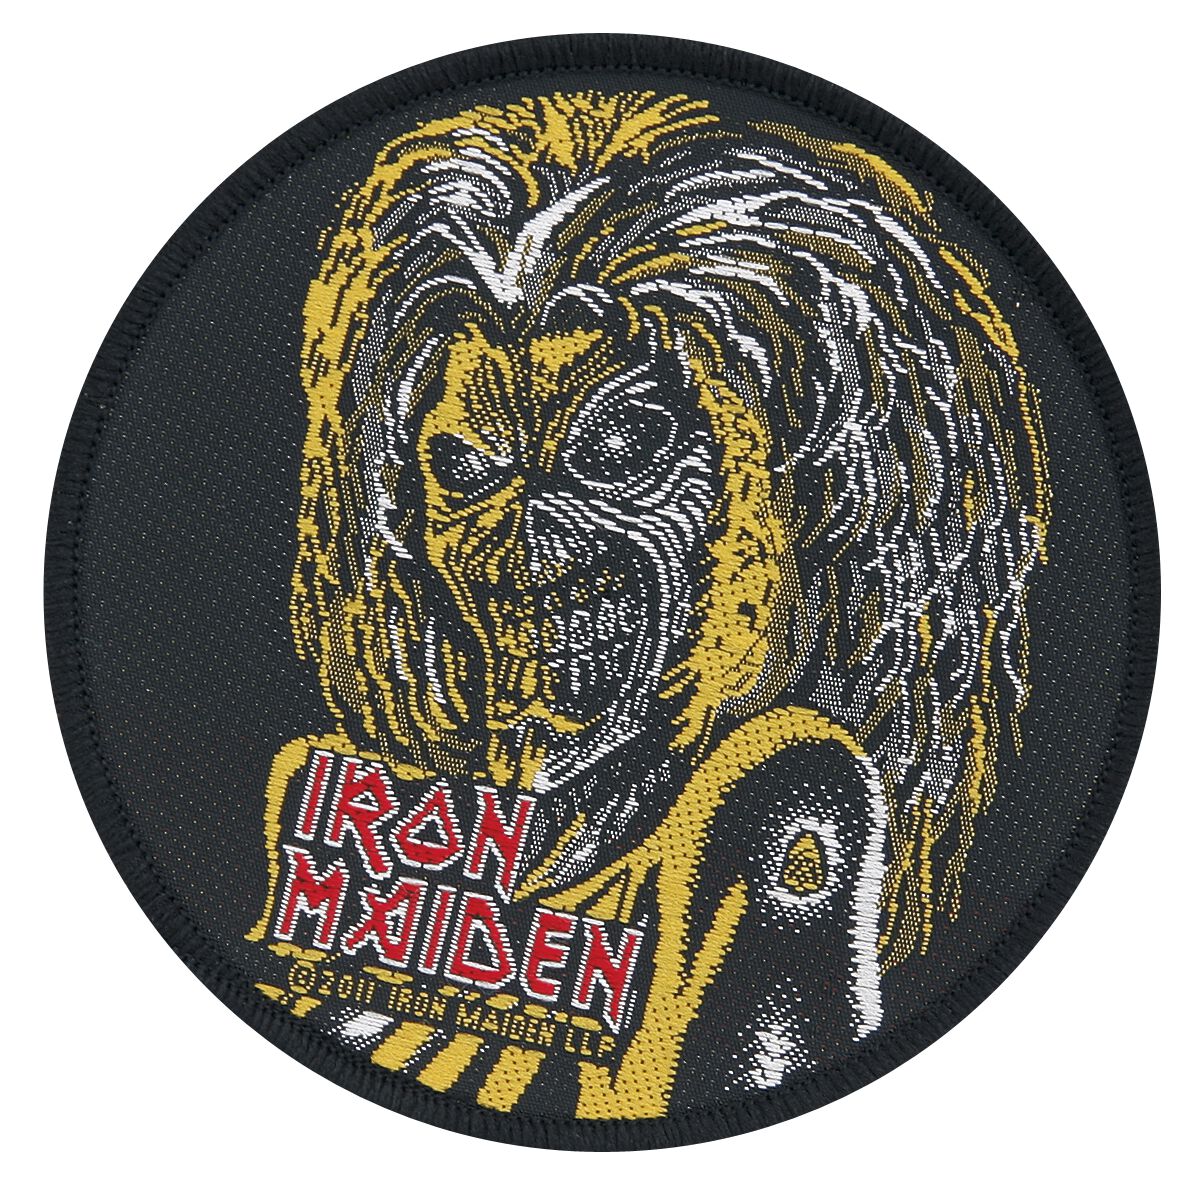 Iron Maiden - Eddie - Patch - multicolor